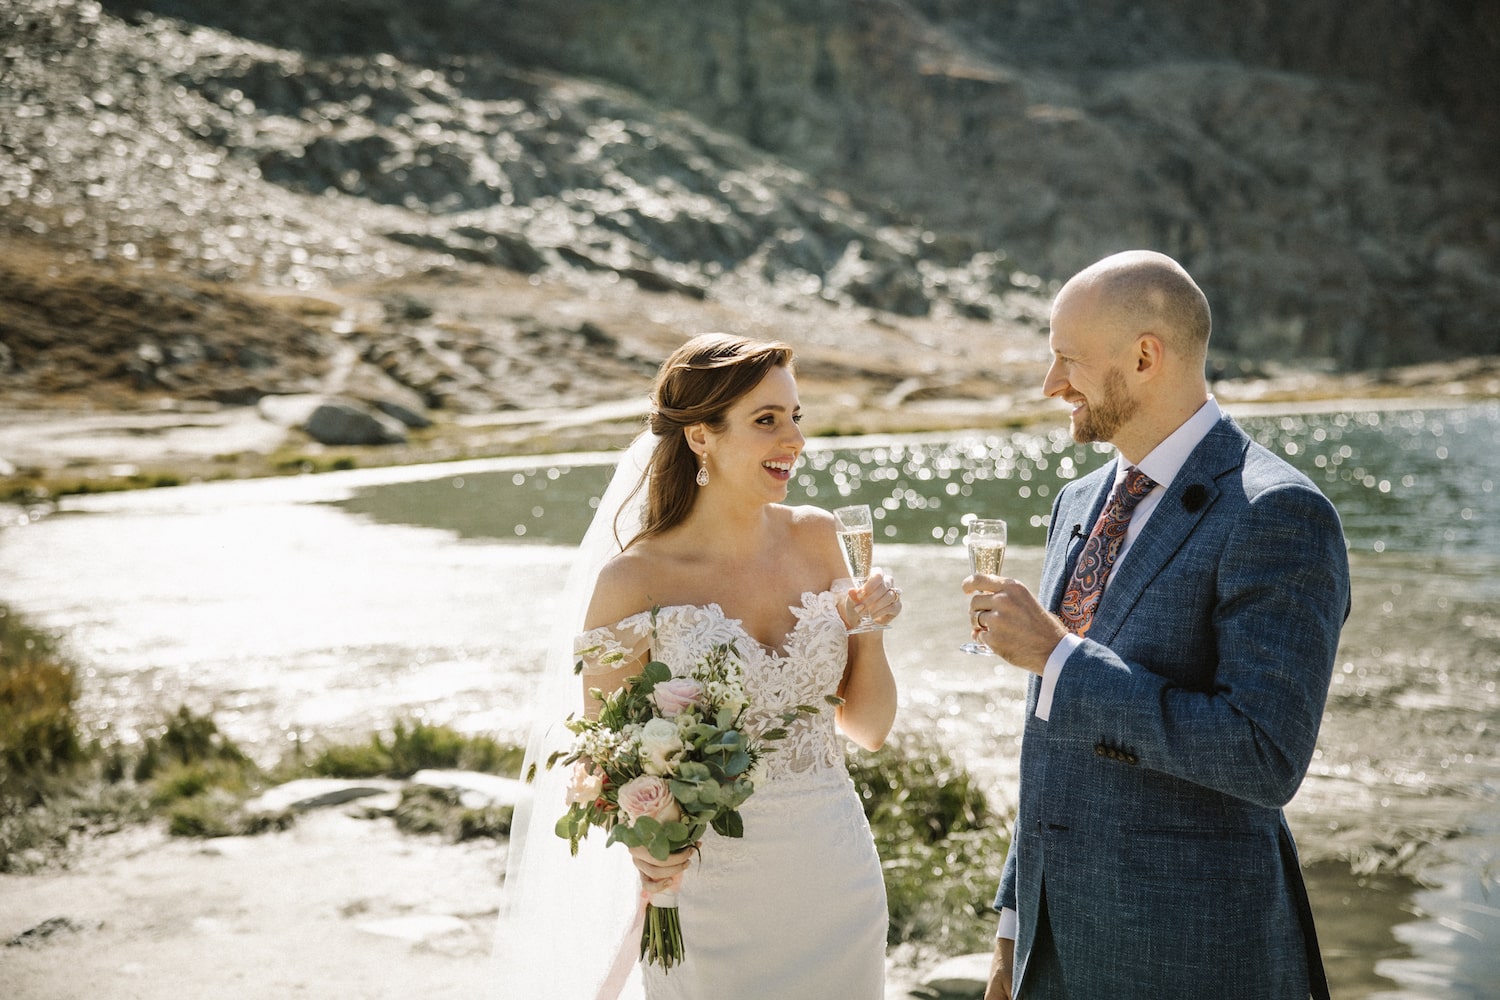 an intimate wedding ceremony in front of the matterhorn, Zermatt, Switzerland